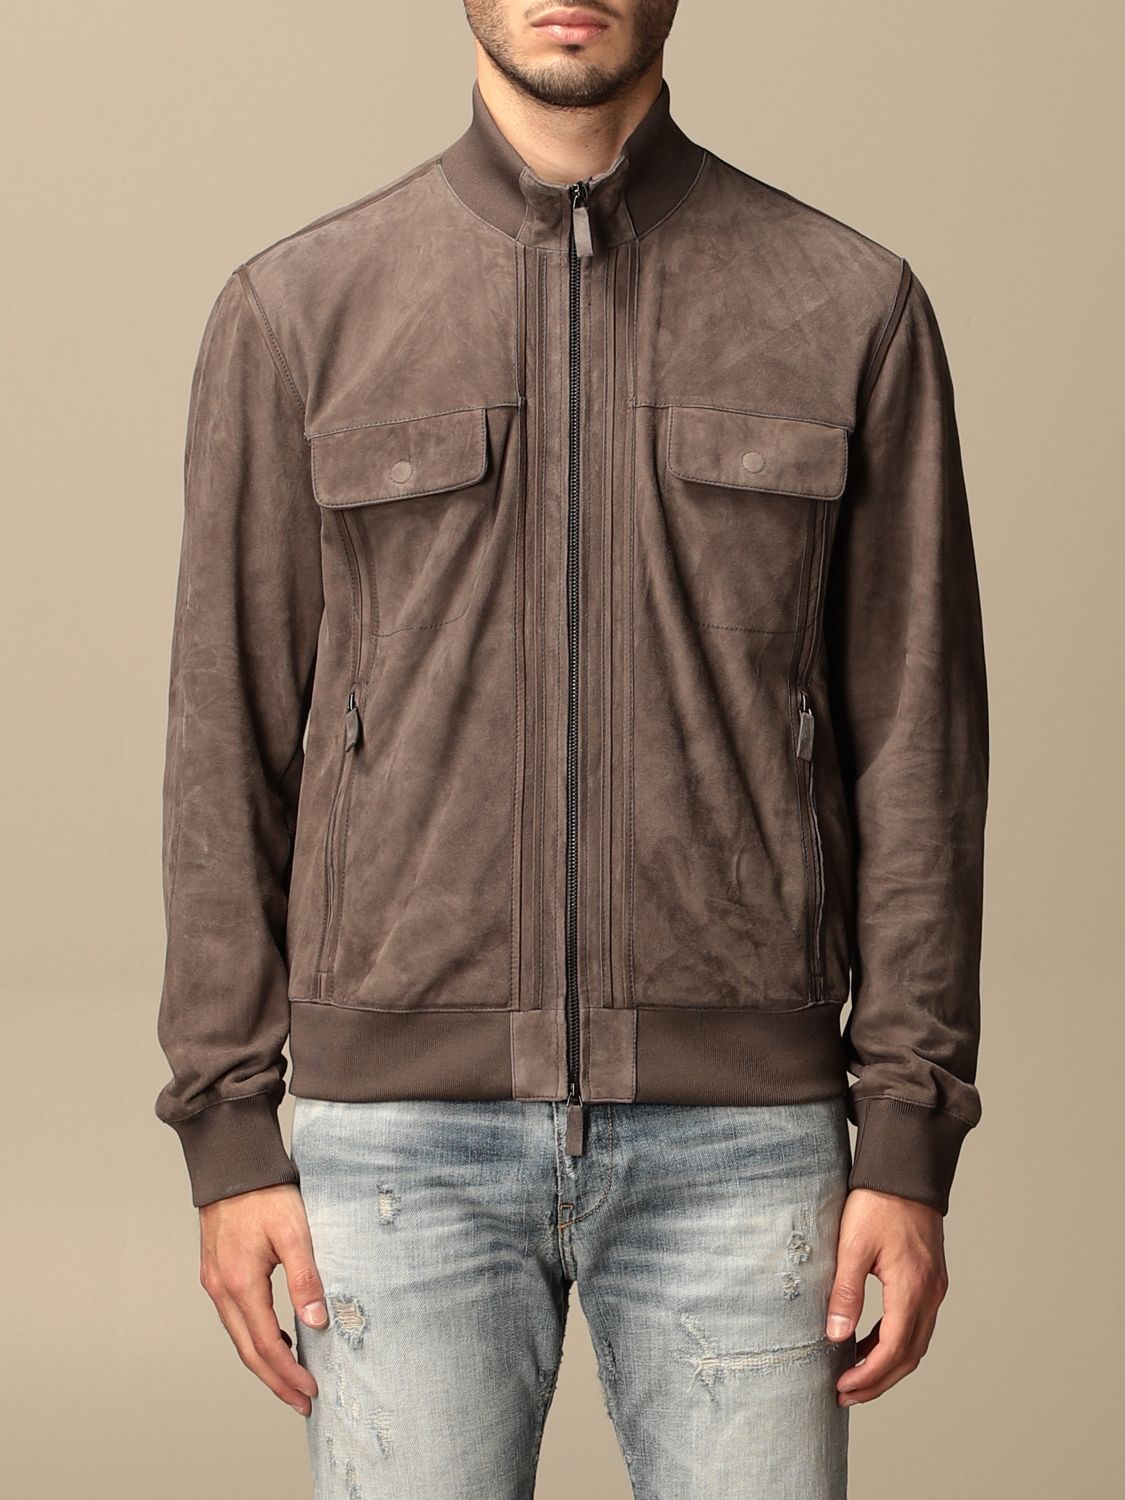 EMPORIO ARMANI: zipped jacket - Grey | Emporio Armani jacket A1R05P A1P05  online on GIGLIO.COM